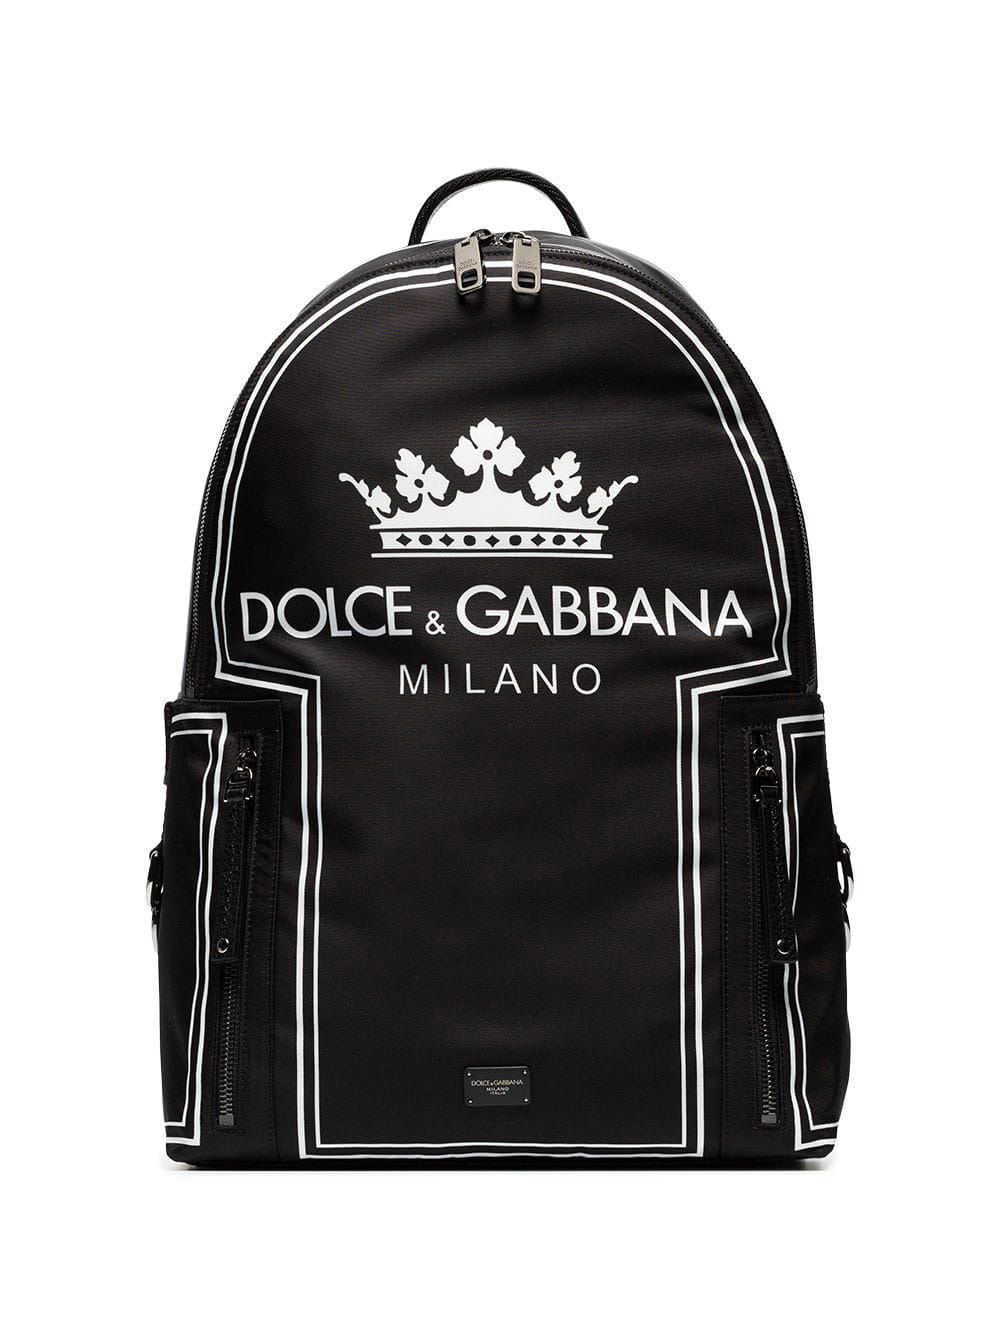 фото Dolce & gabbana рюкзак с принтом логотипа